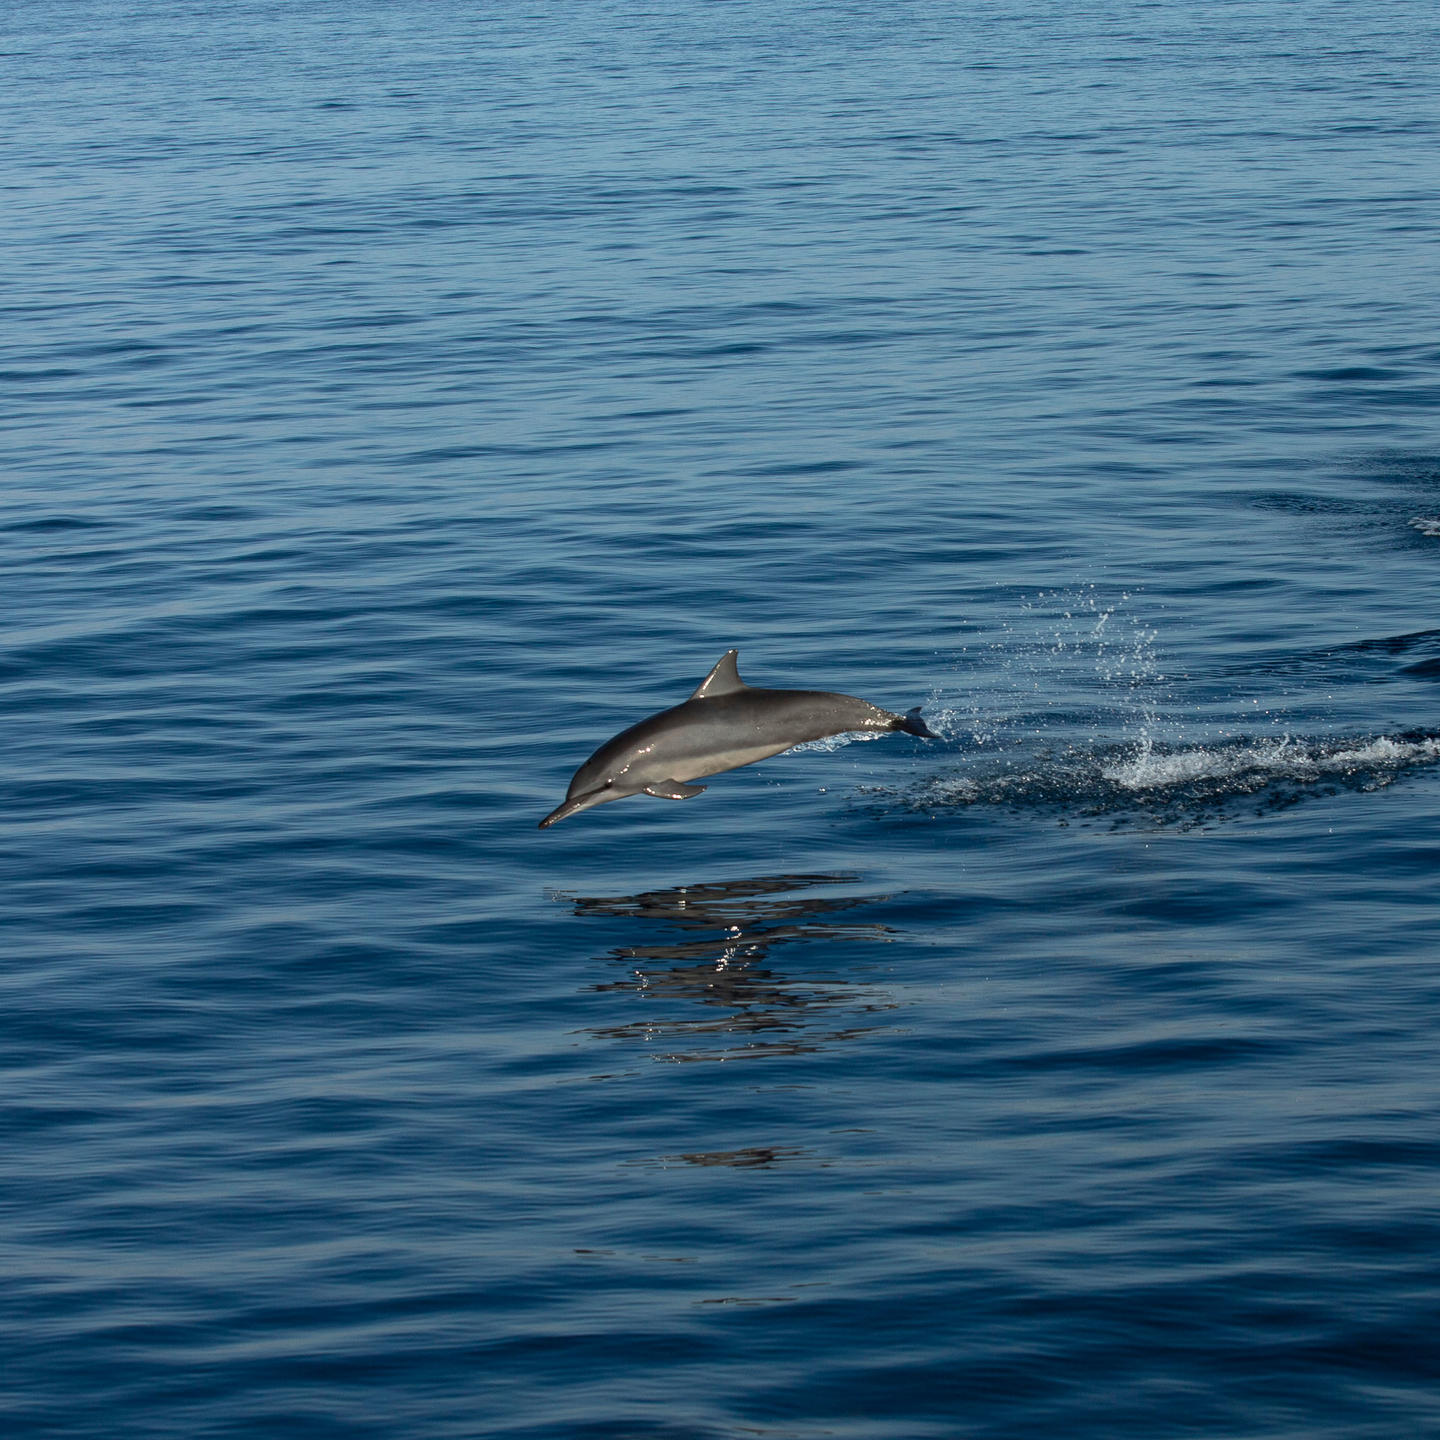 Amanwana, Moyo Satonda National Park, Indonesia - Dolphin